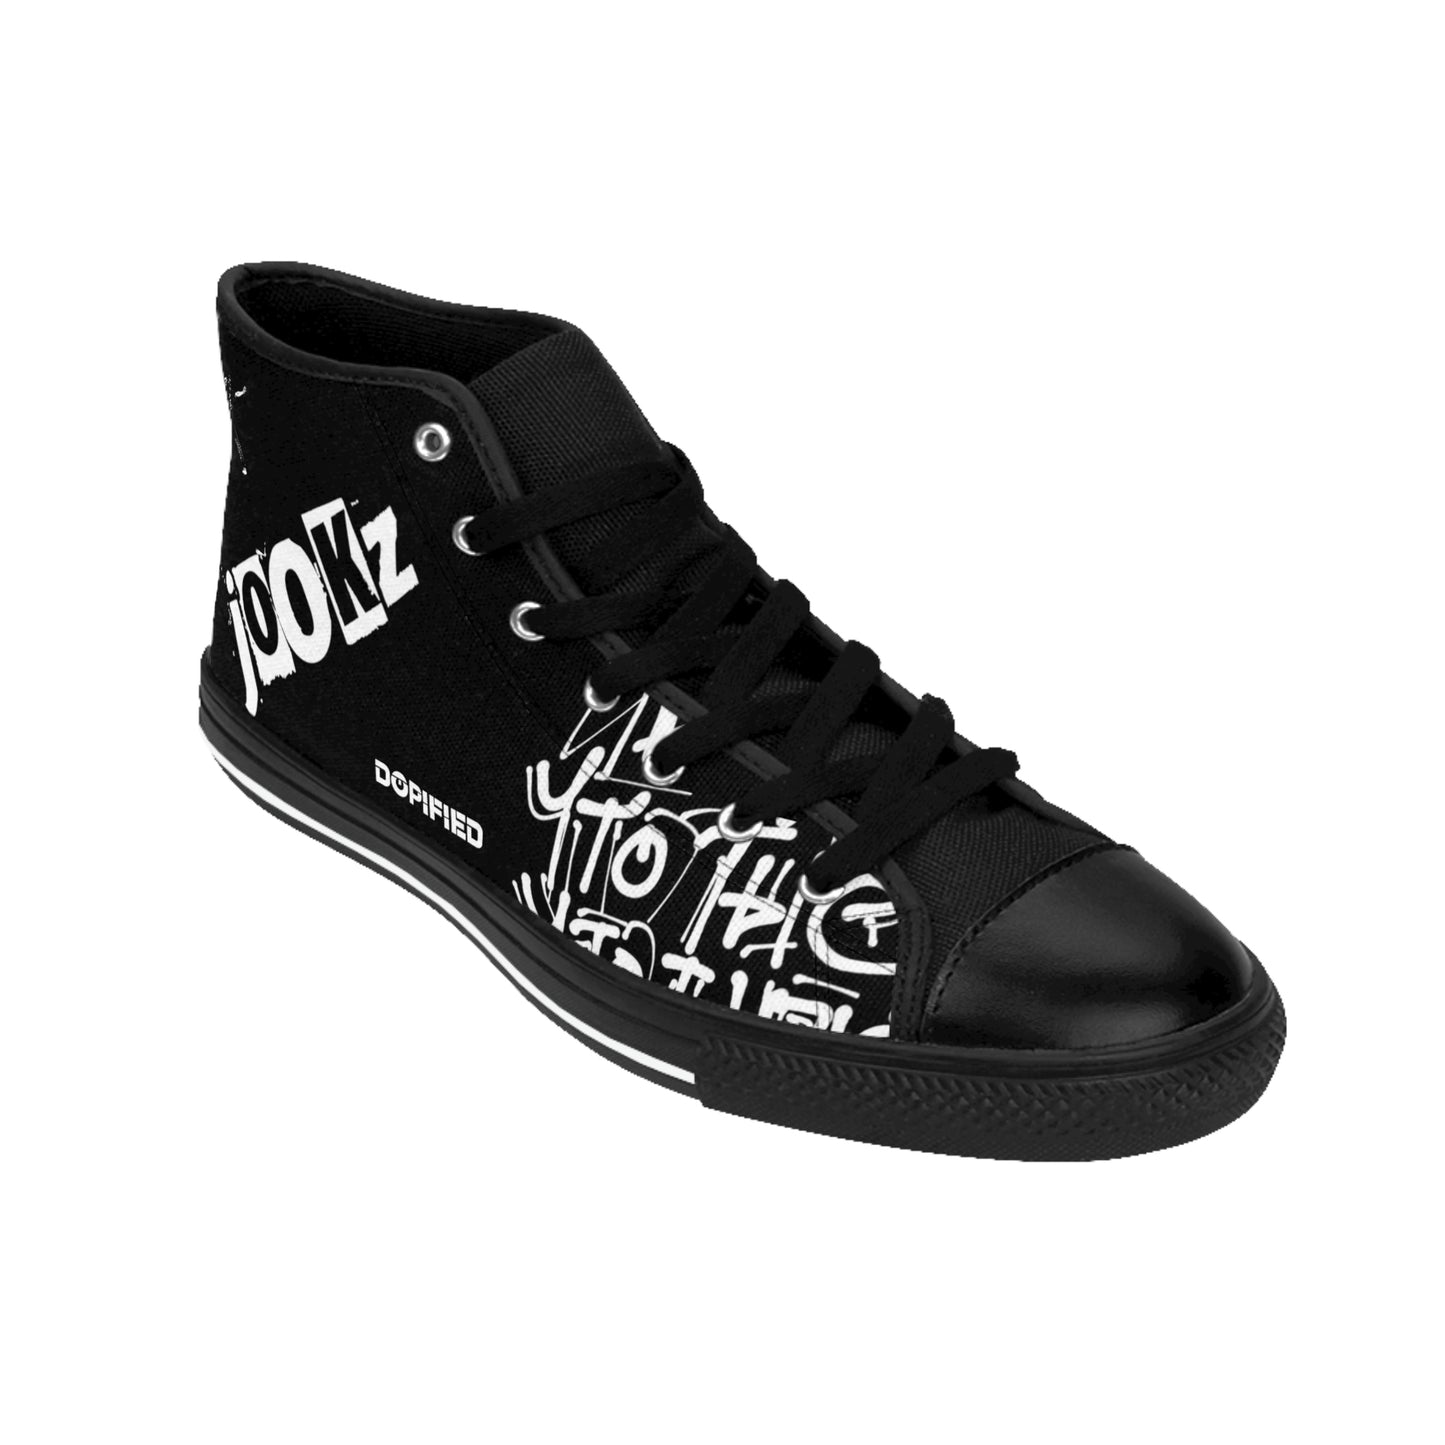 Memphis jOoKz Inspired by Memphis Jookin💯 jOoKz Classic Sneakers